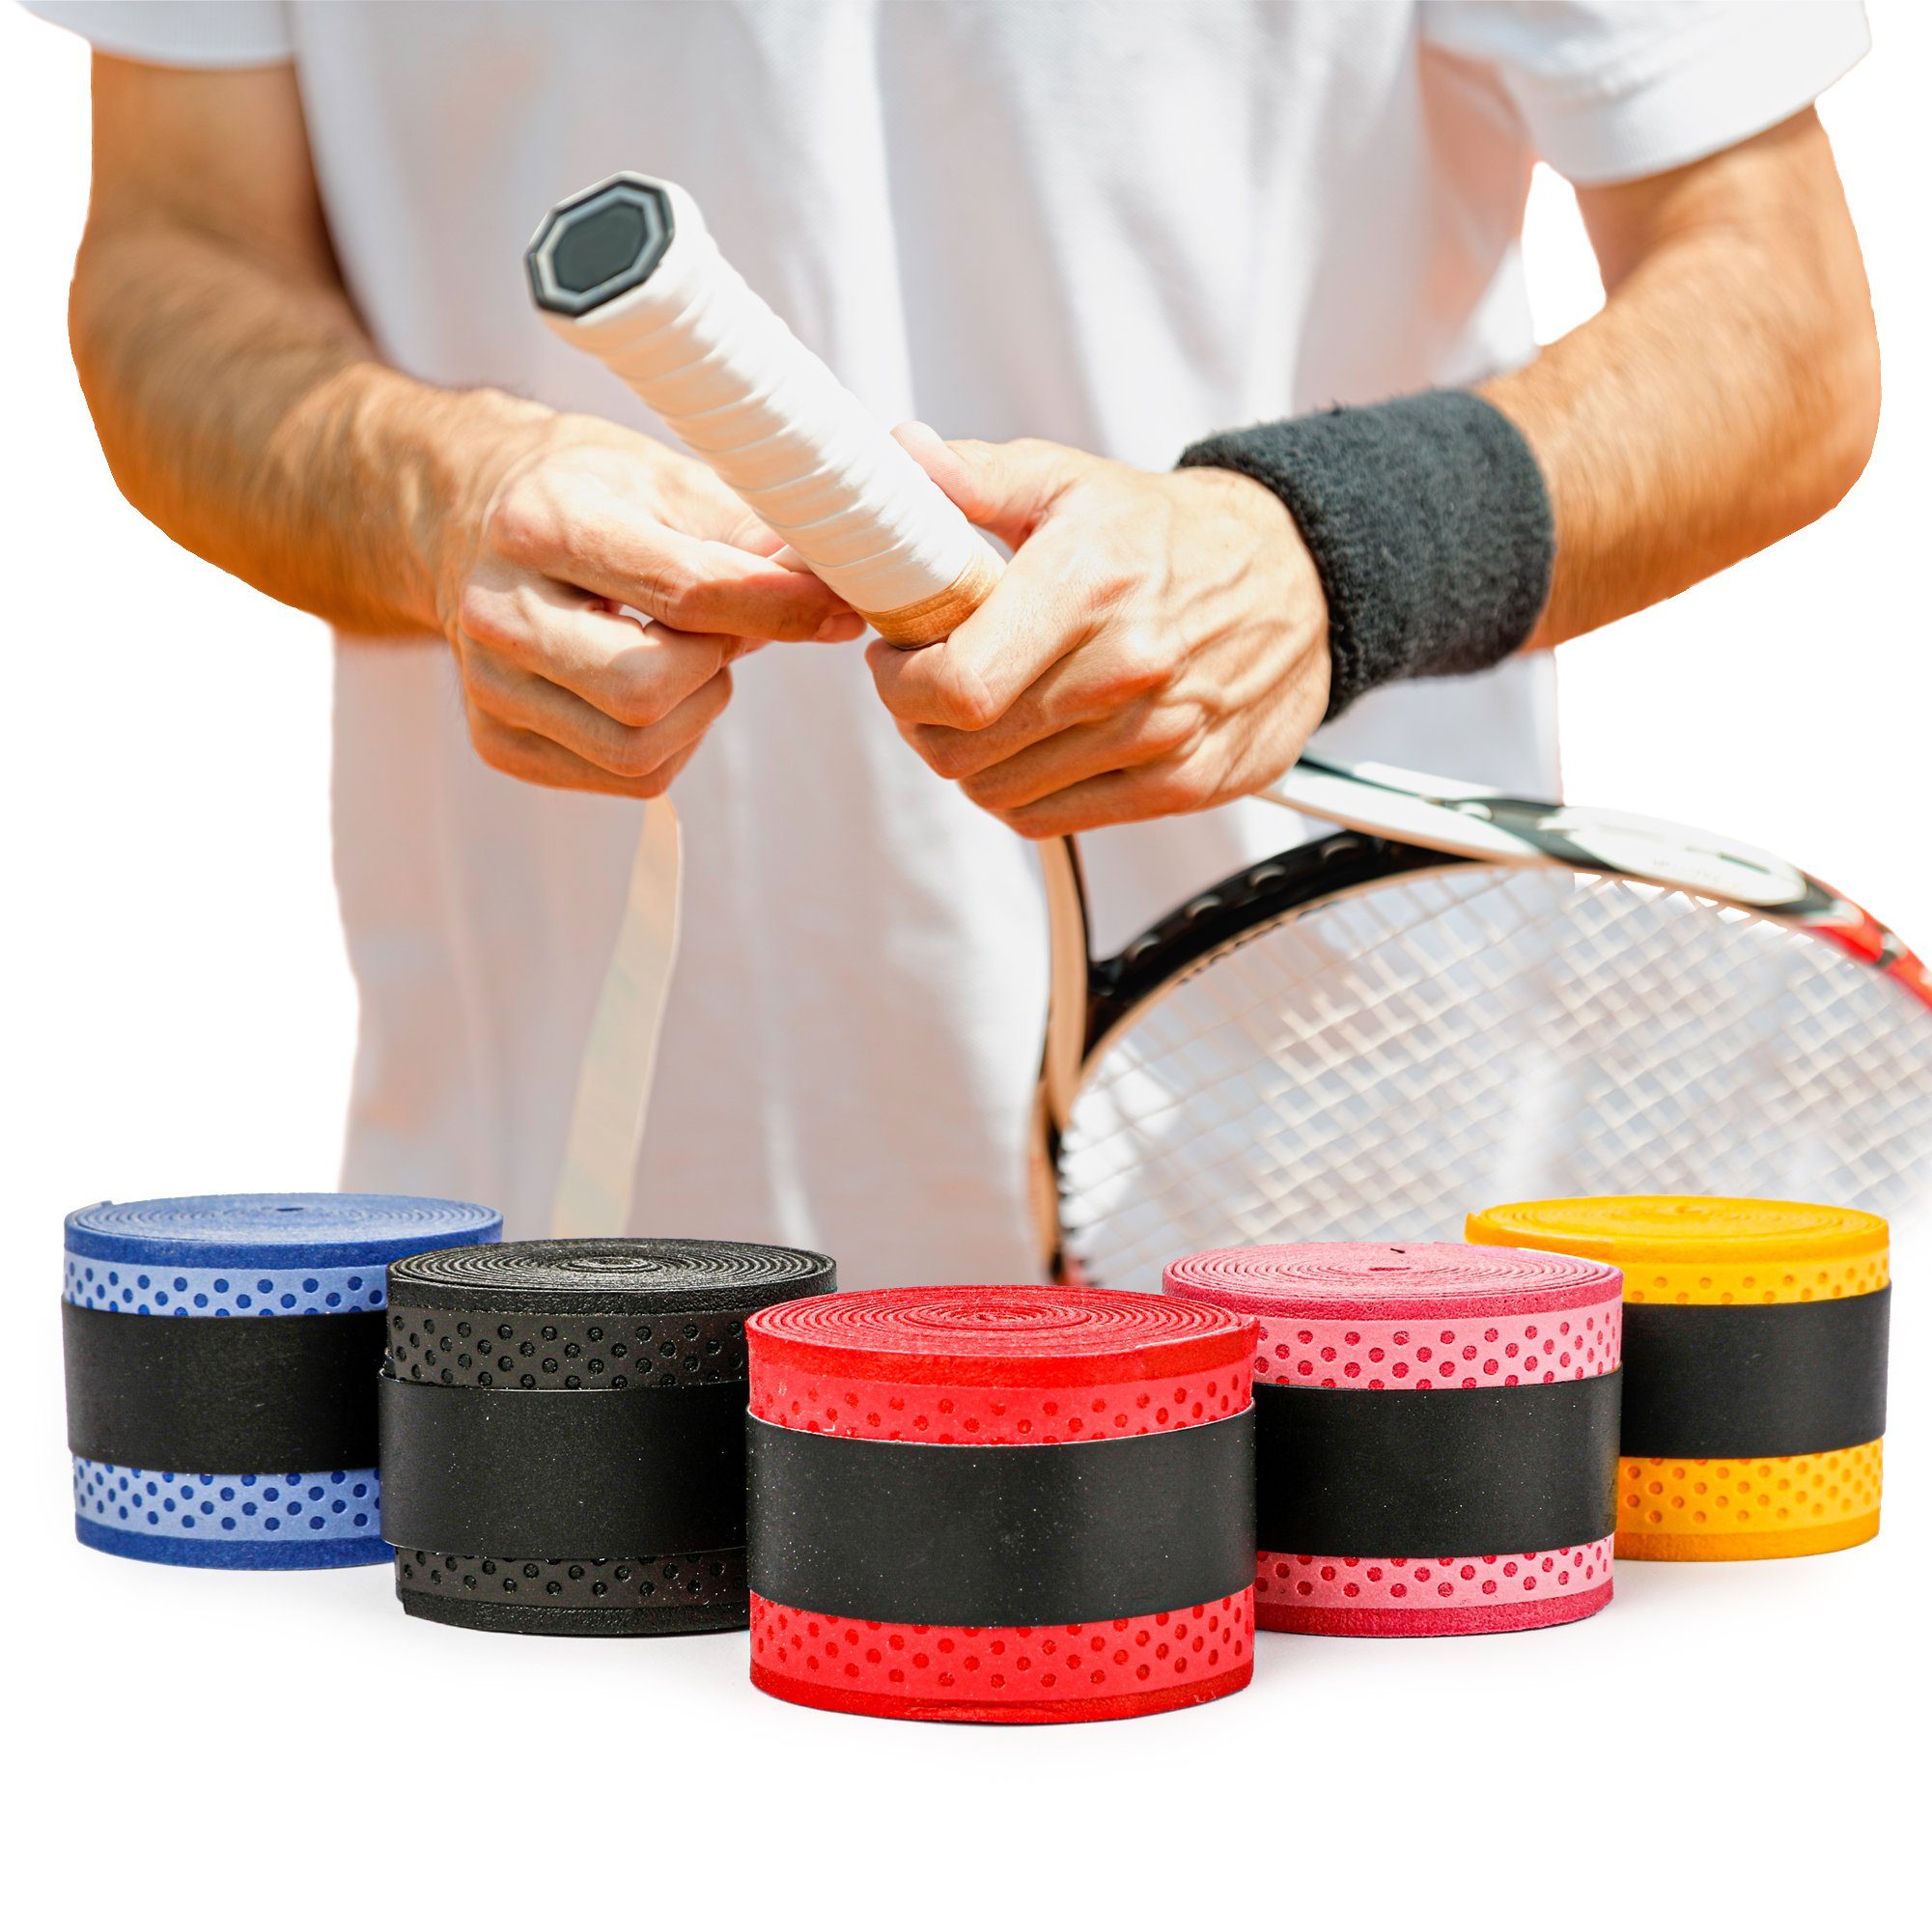 Tennis Badminton Squash Schläger Griffbänder Wickel Lenker Overgrip Band 